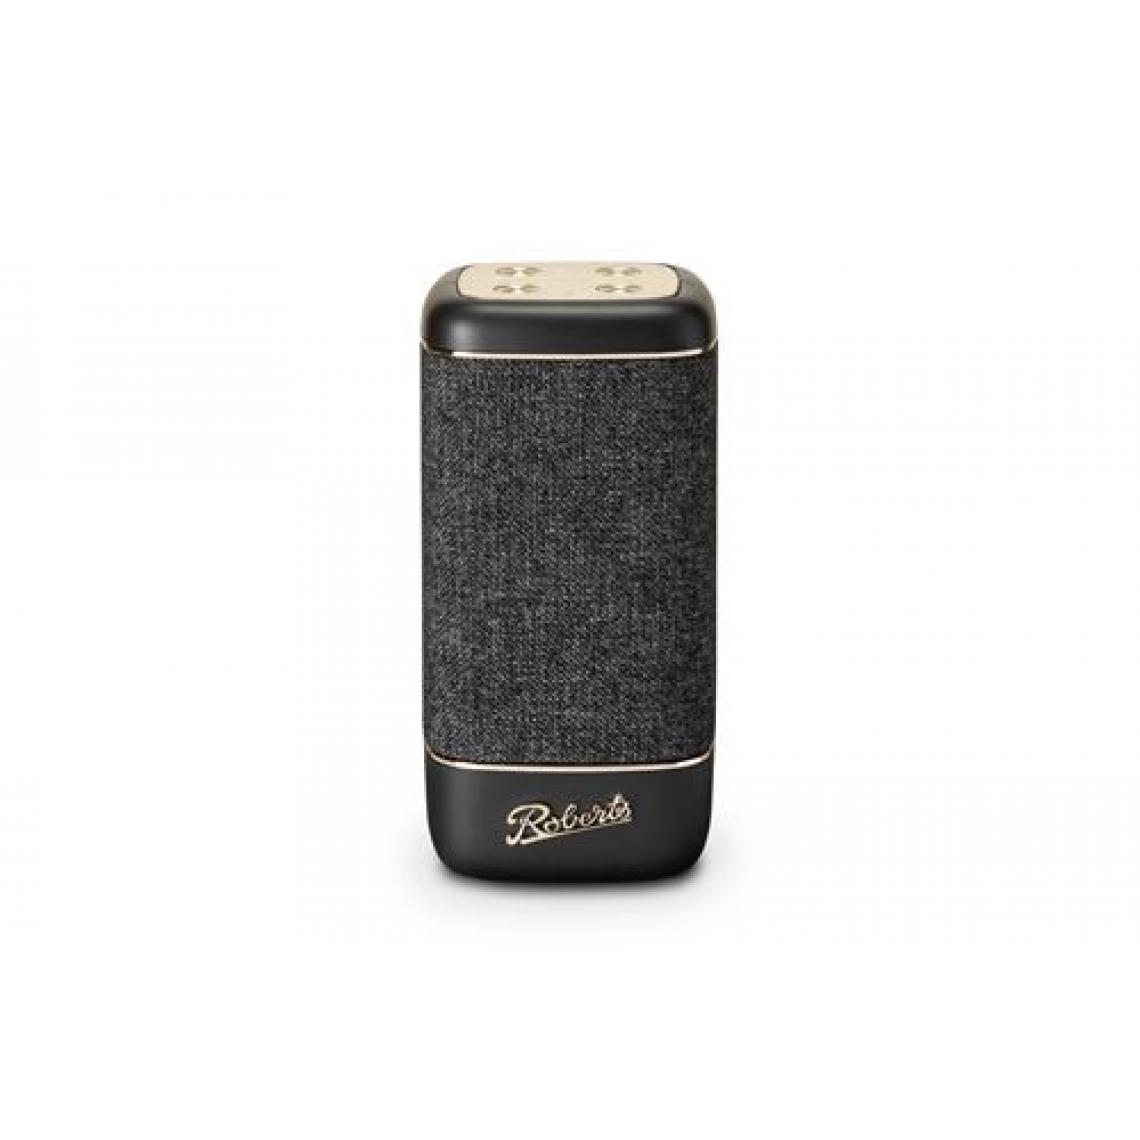 Roberts - Enceinte portable Bluetooth Roberts Beacon 335 Noir carbone - Enceintes Hifi